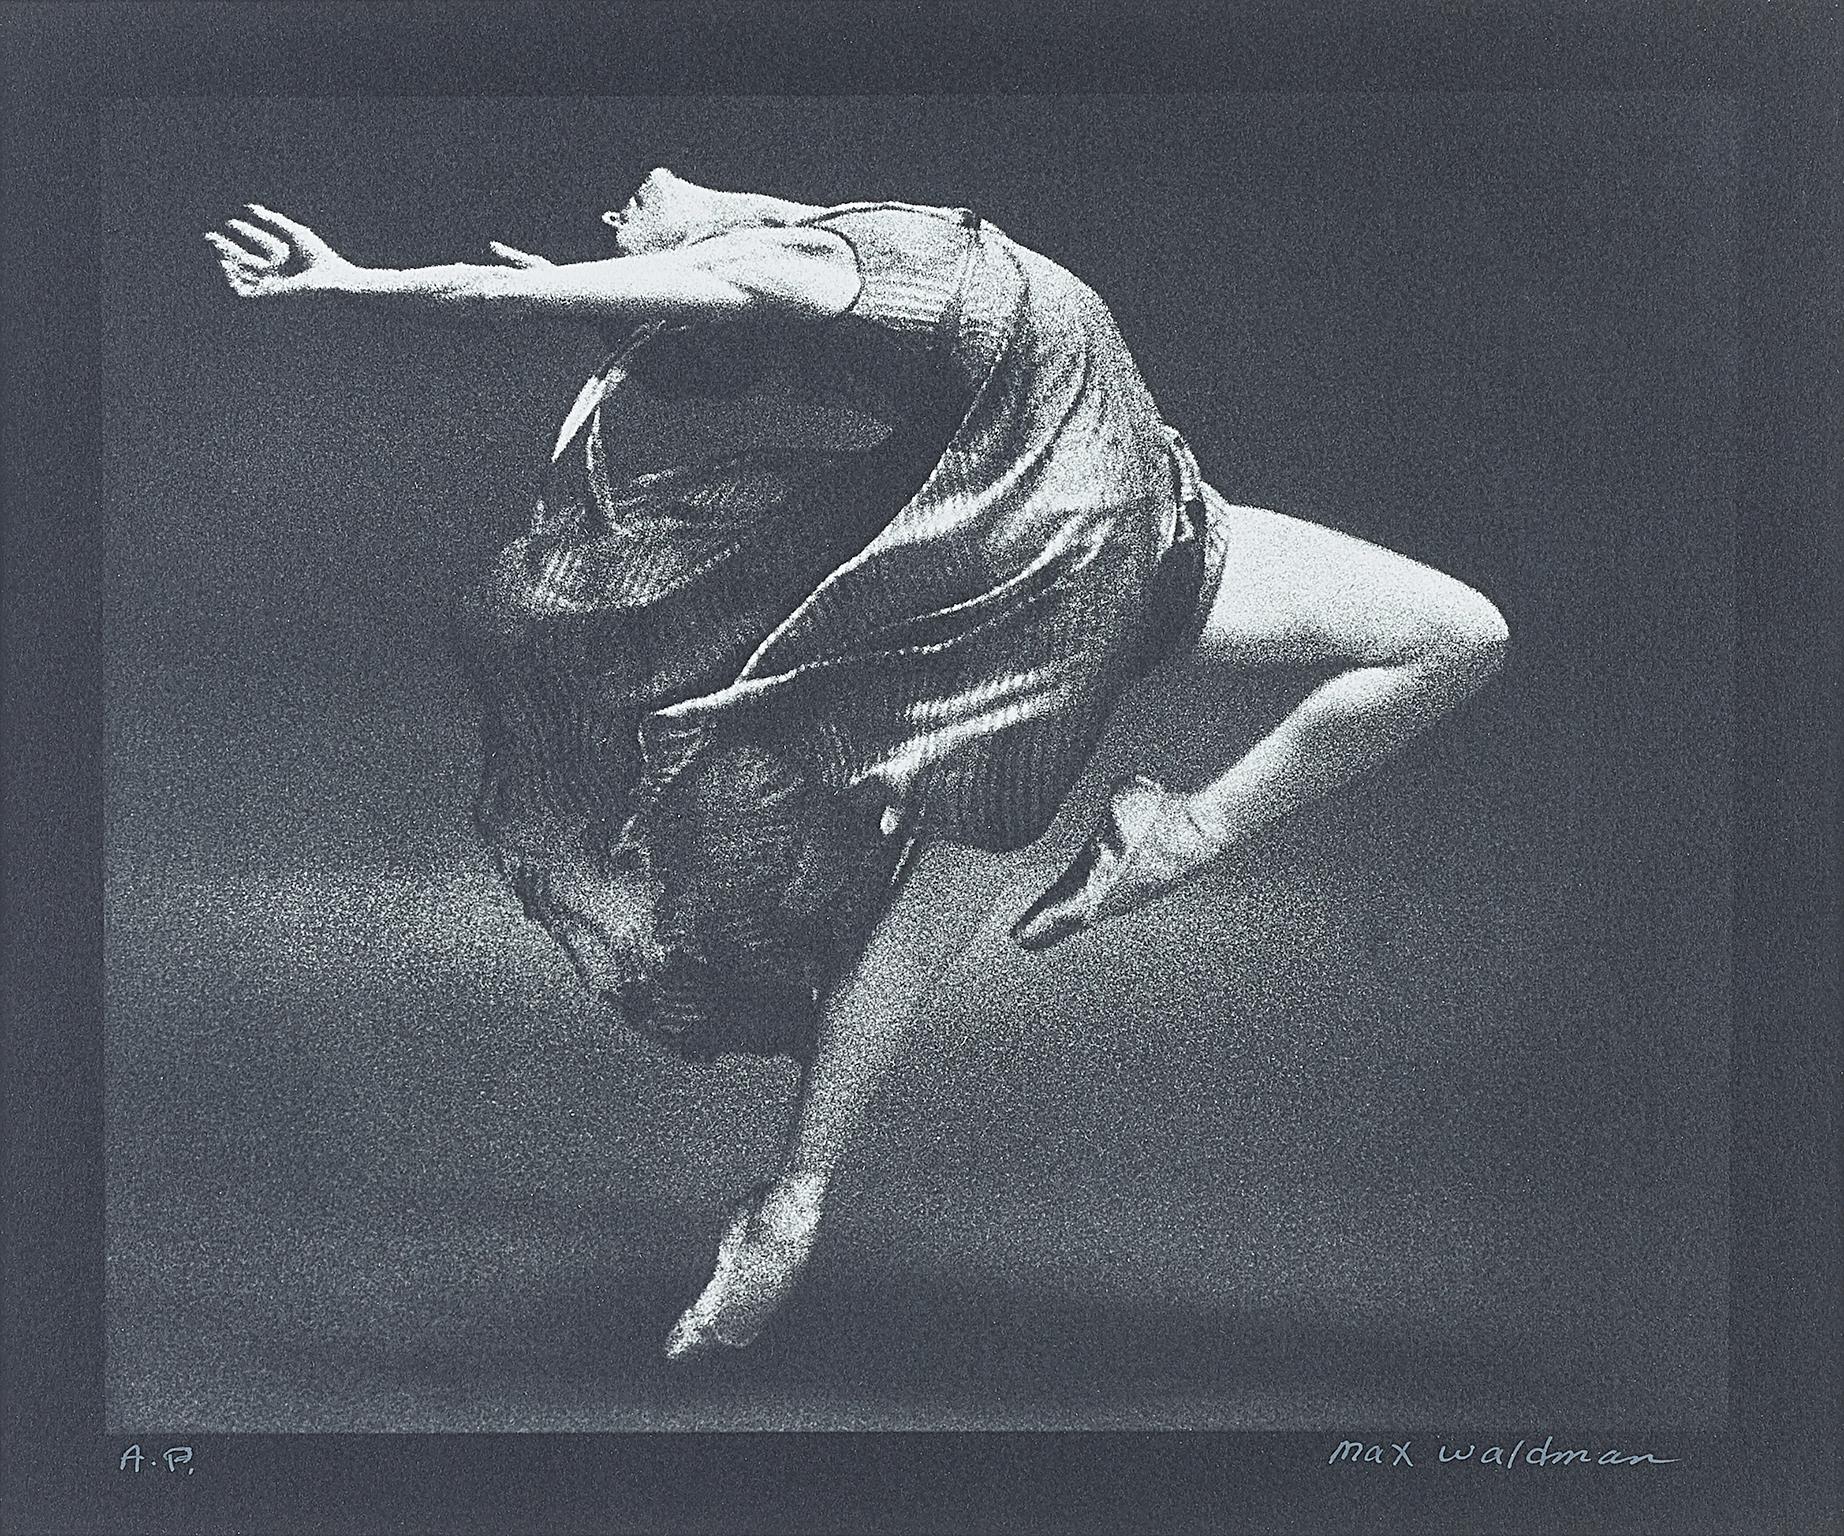  "Natalia Makarova "  vintage photography. "Serge Lifar "